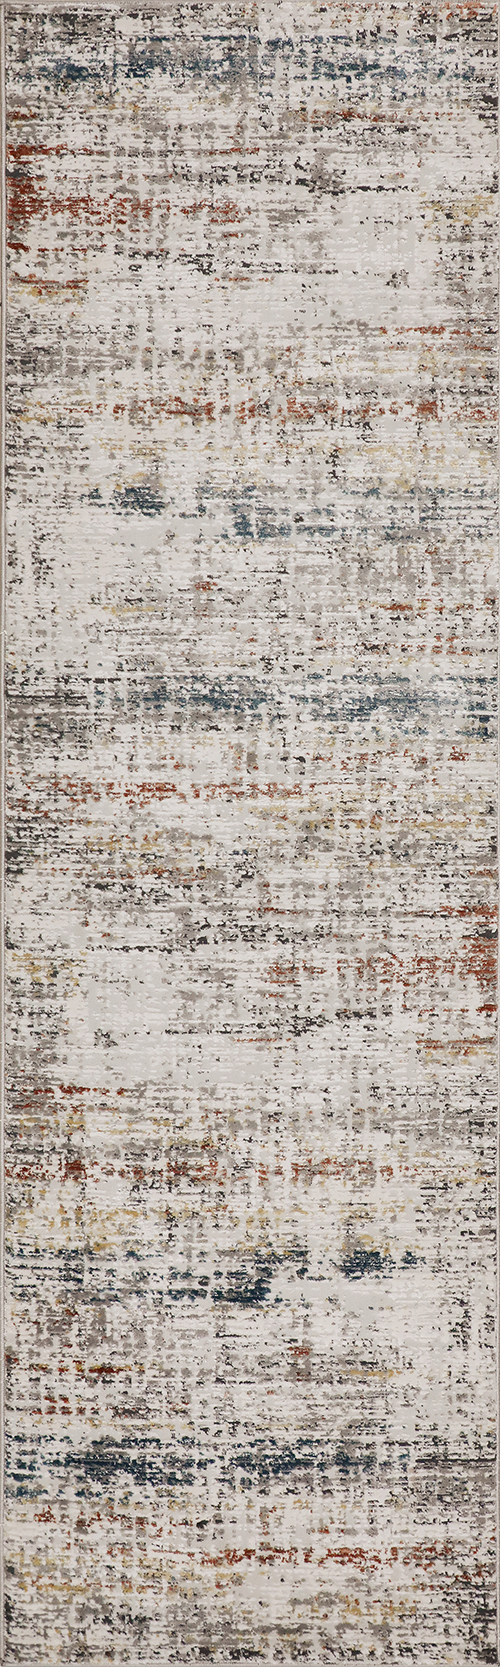 Nourison Rugs - Rustic Textures Runner RUS14 Rug in Grey Multicolour - 2.3m x 0.66m